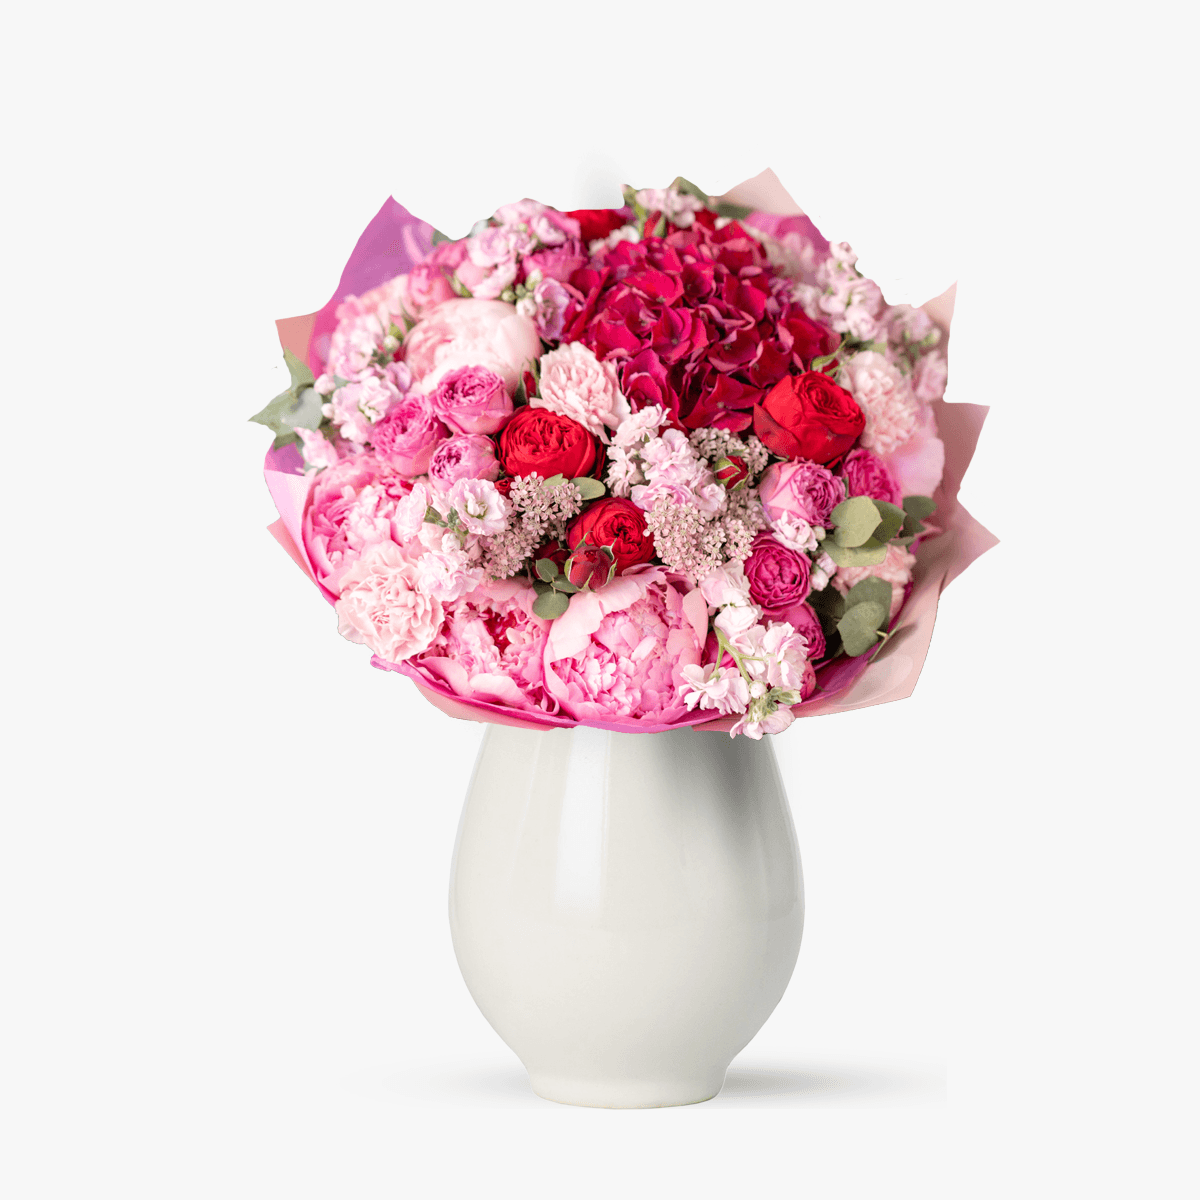 Buchet cu bujori roz si hortensie – Standard Buchet